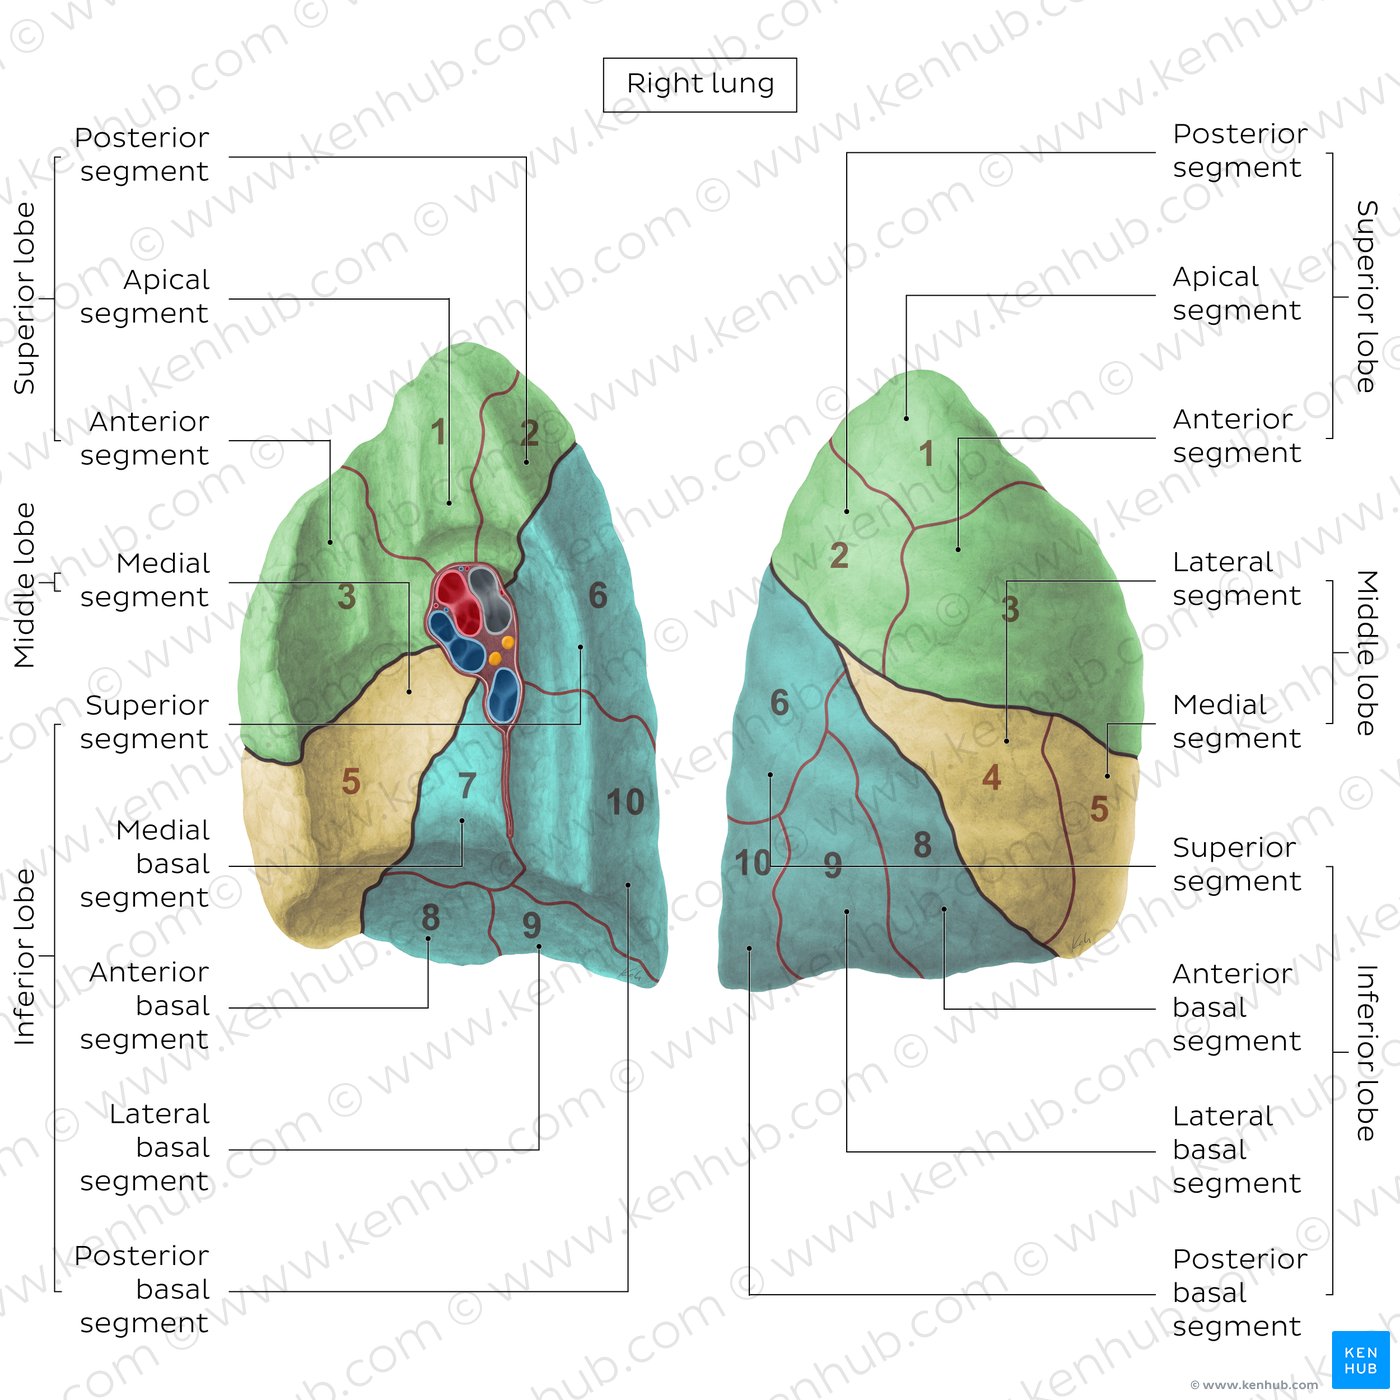 Bronchopulmonary segments (Right lung)